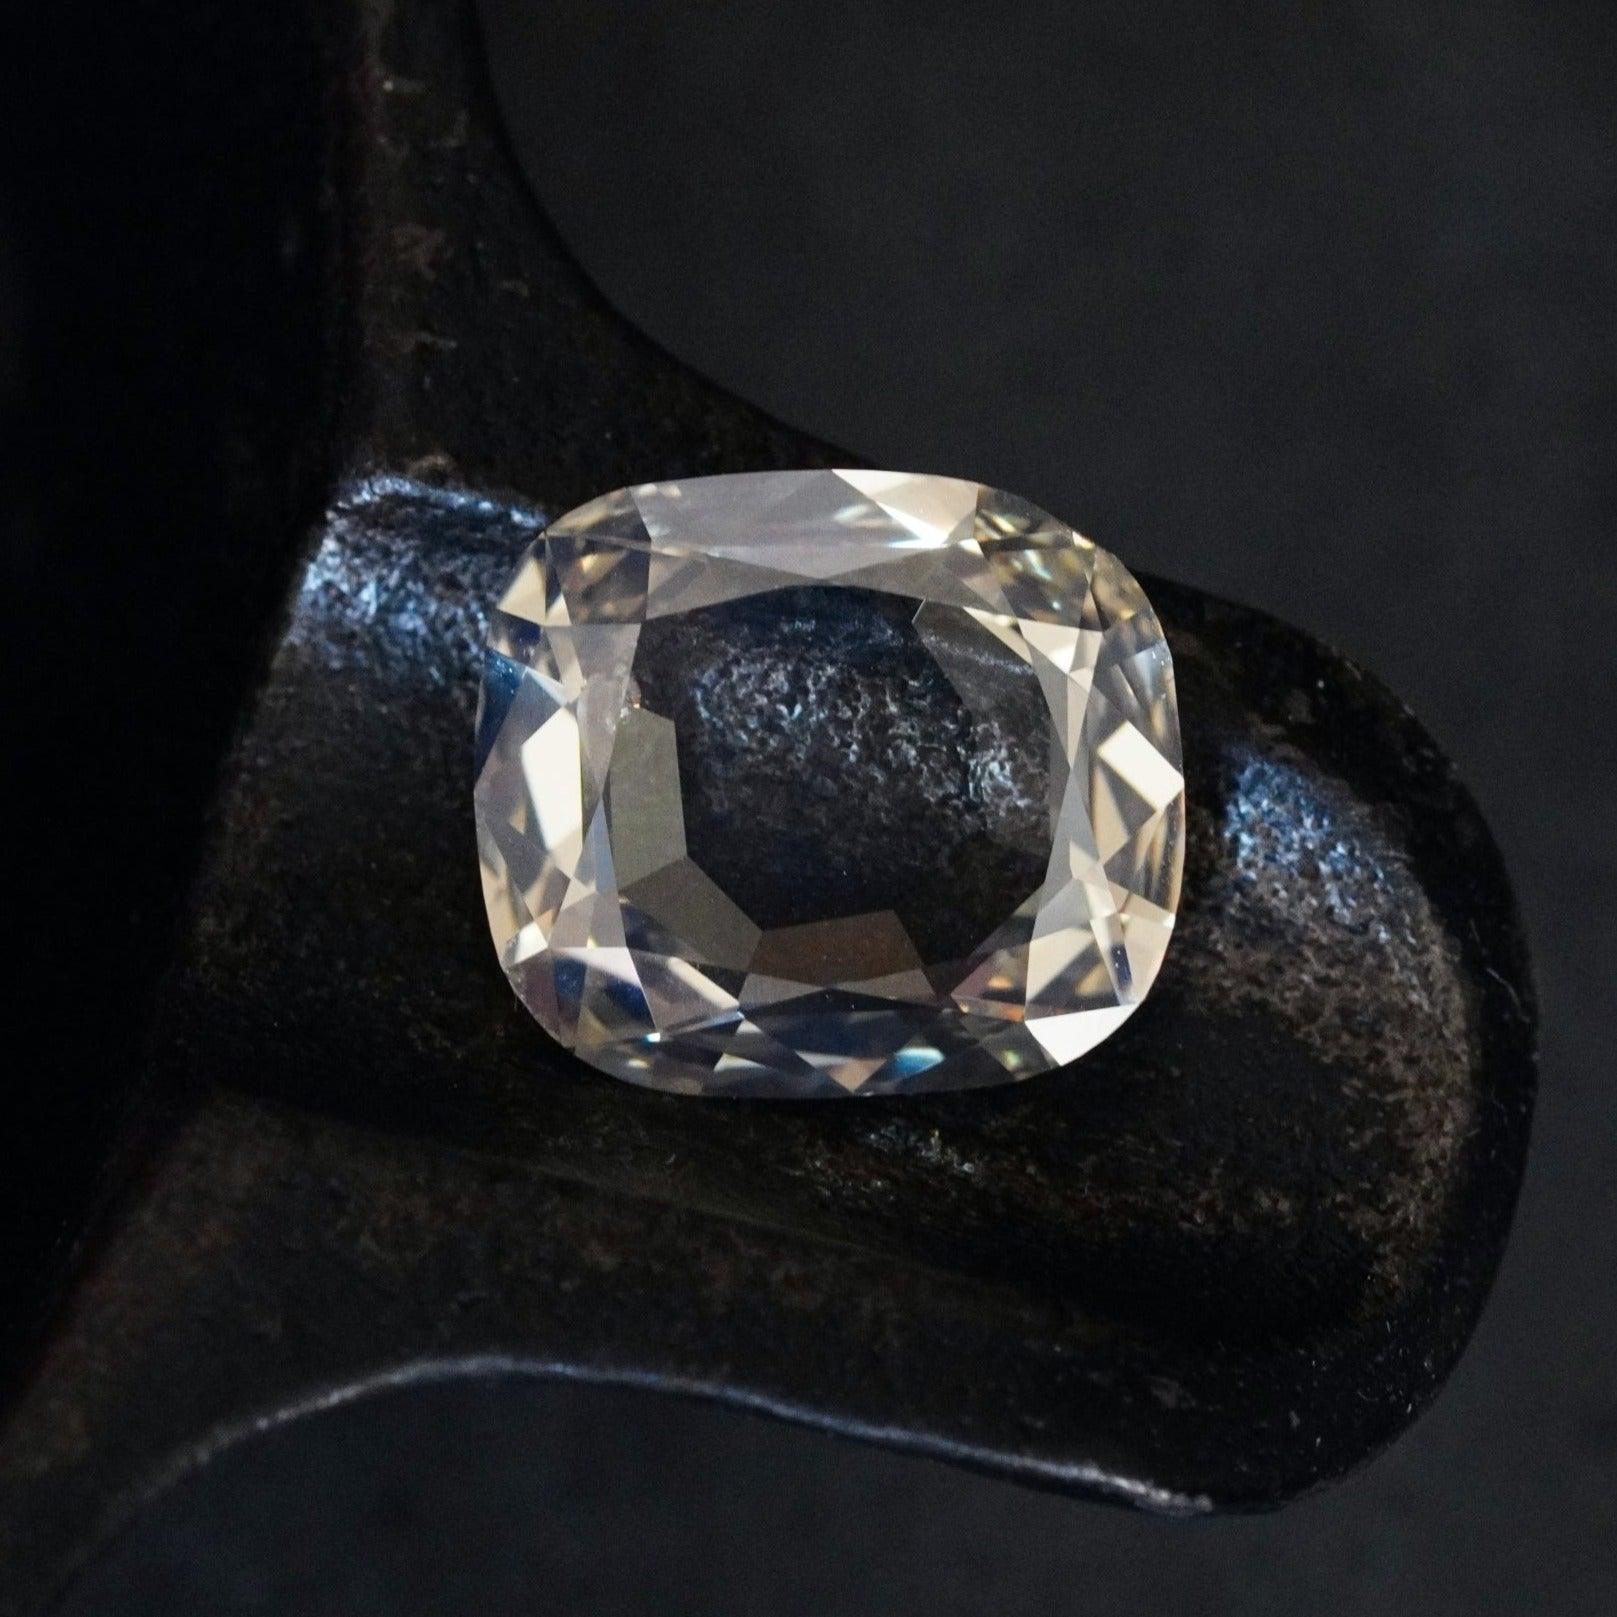 Anup Jogani's masterpiece: Unique splendor of a 4.06 CT diamond